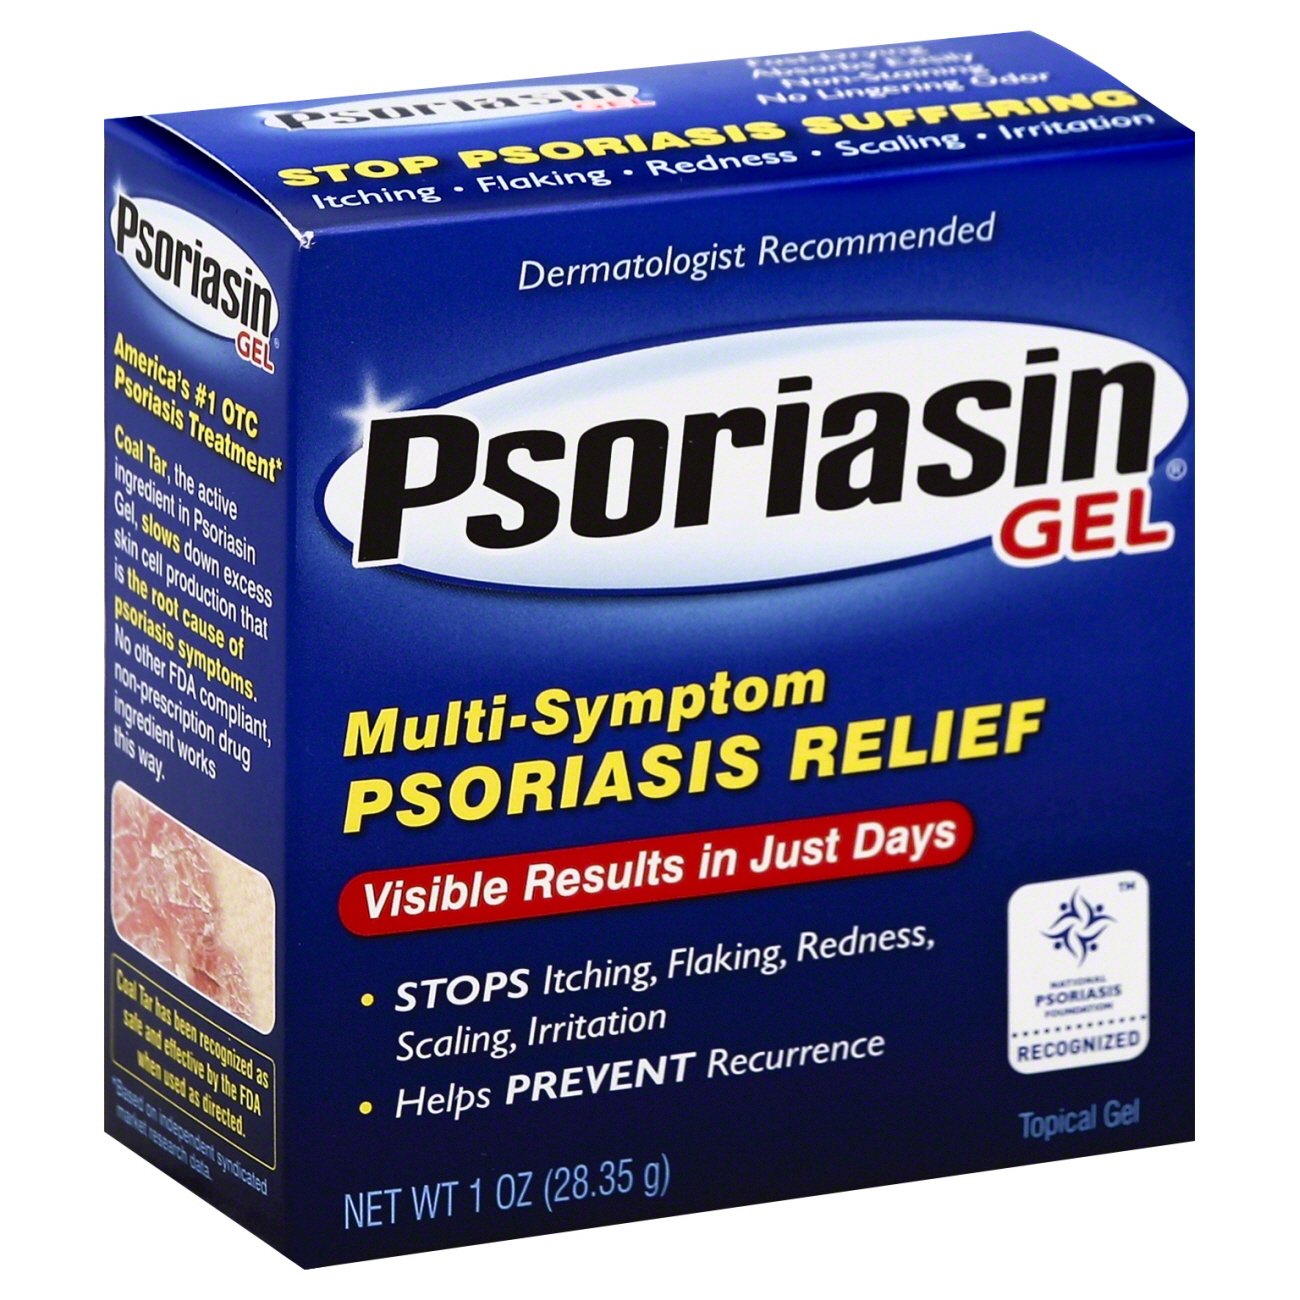 psoriasin for seborrheic dermatitis mit jelentenek a lábakon lévő vörös foltok